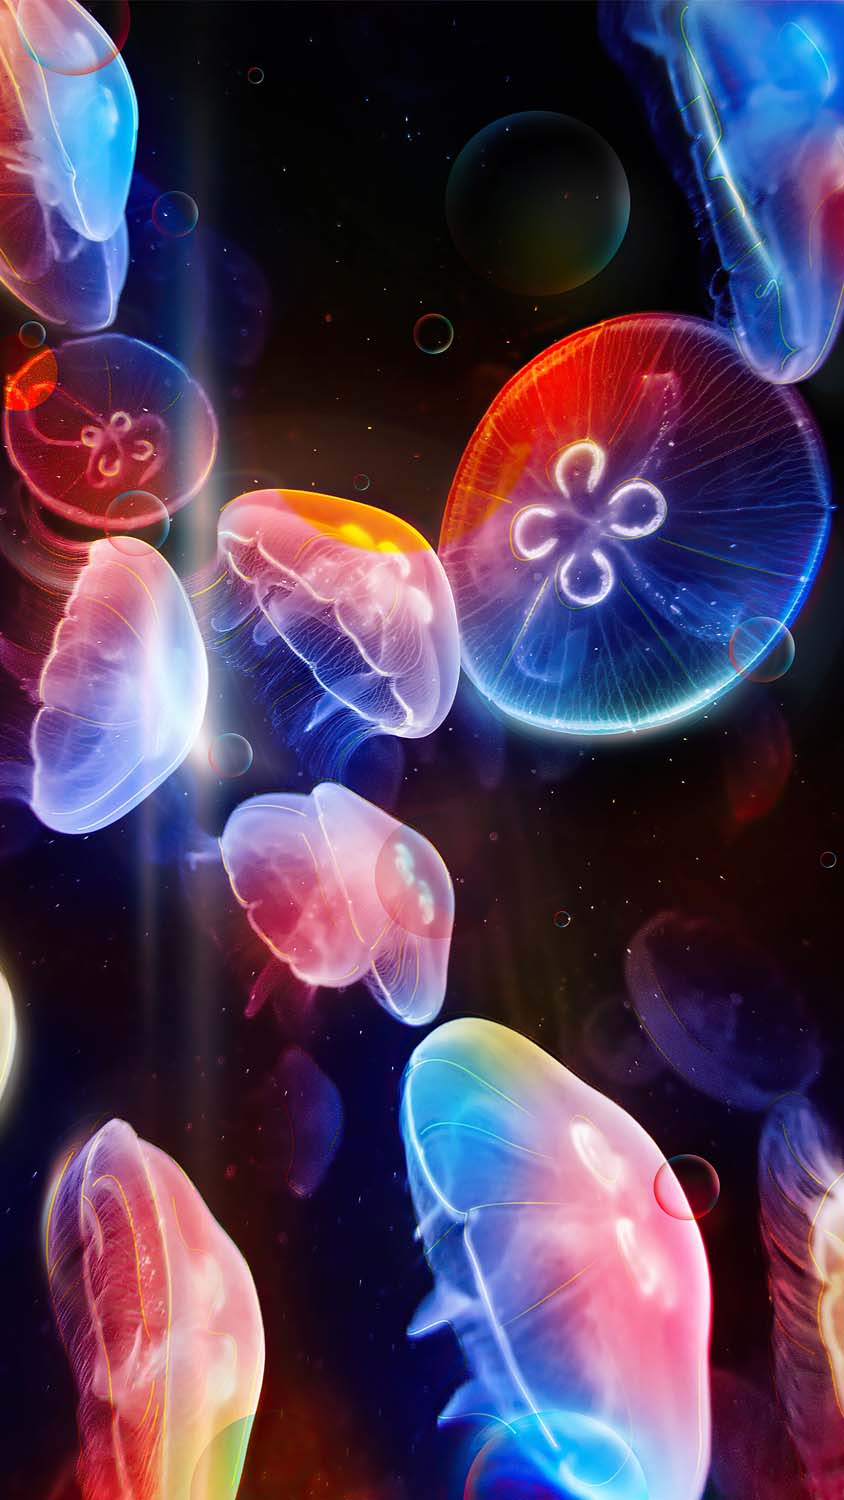 Jellyfish Glow IPhone Wallpaper HD - IPhone Wallpapers : iPhone Wallpapers